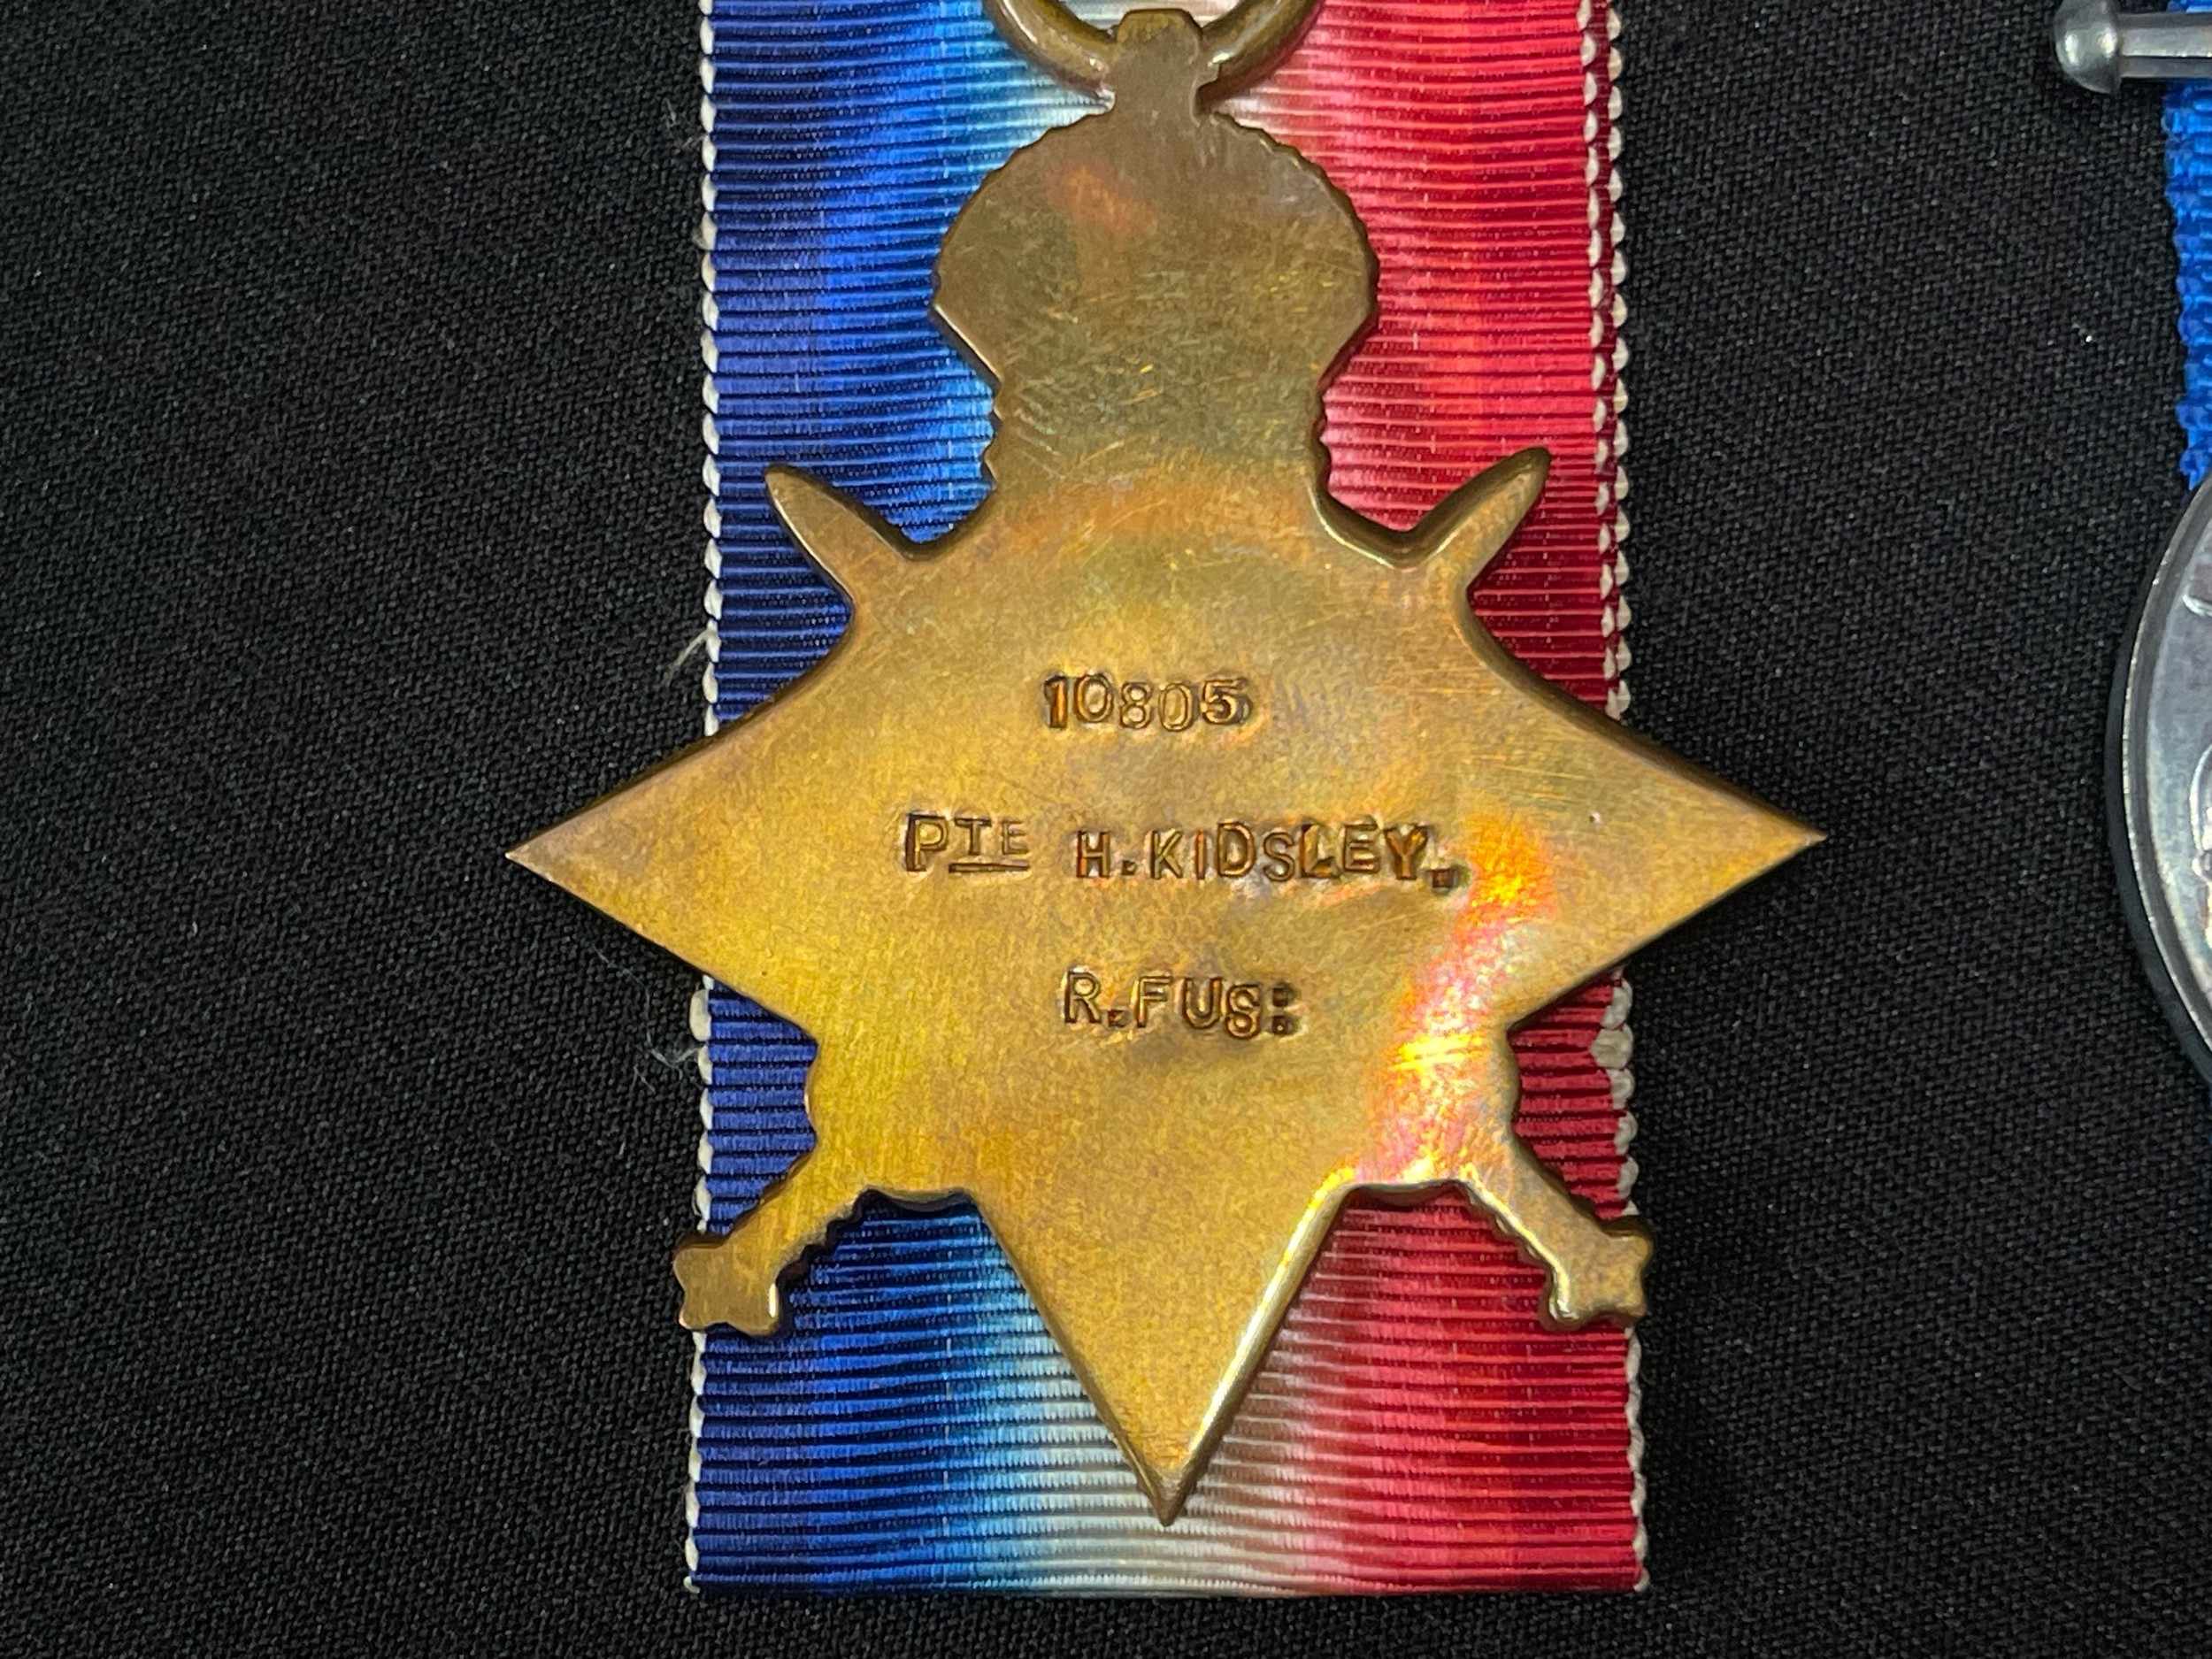 WW1 British 1914-15 Star, British War Medal and Victory Medal to 10805 Pte. H. Kidsley, Royal - Image 3 of 5